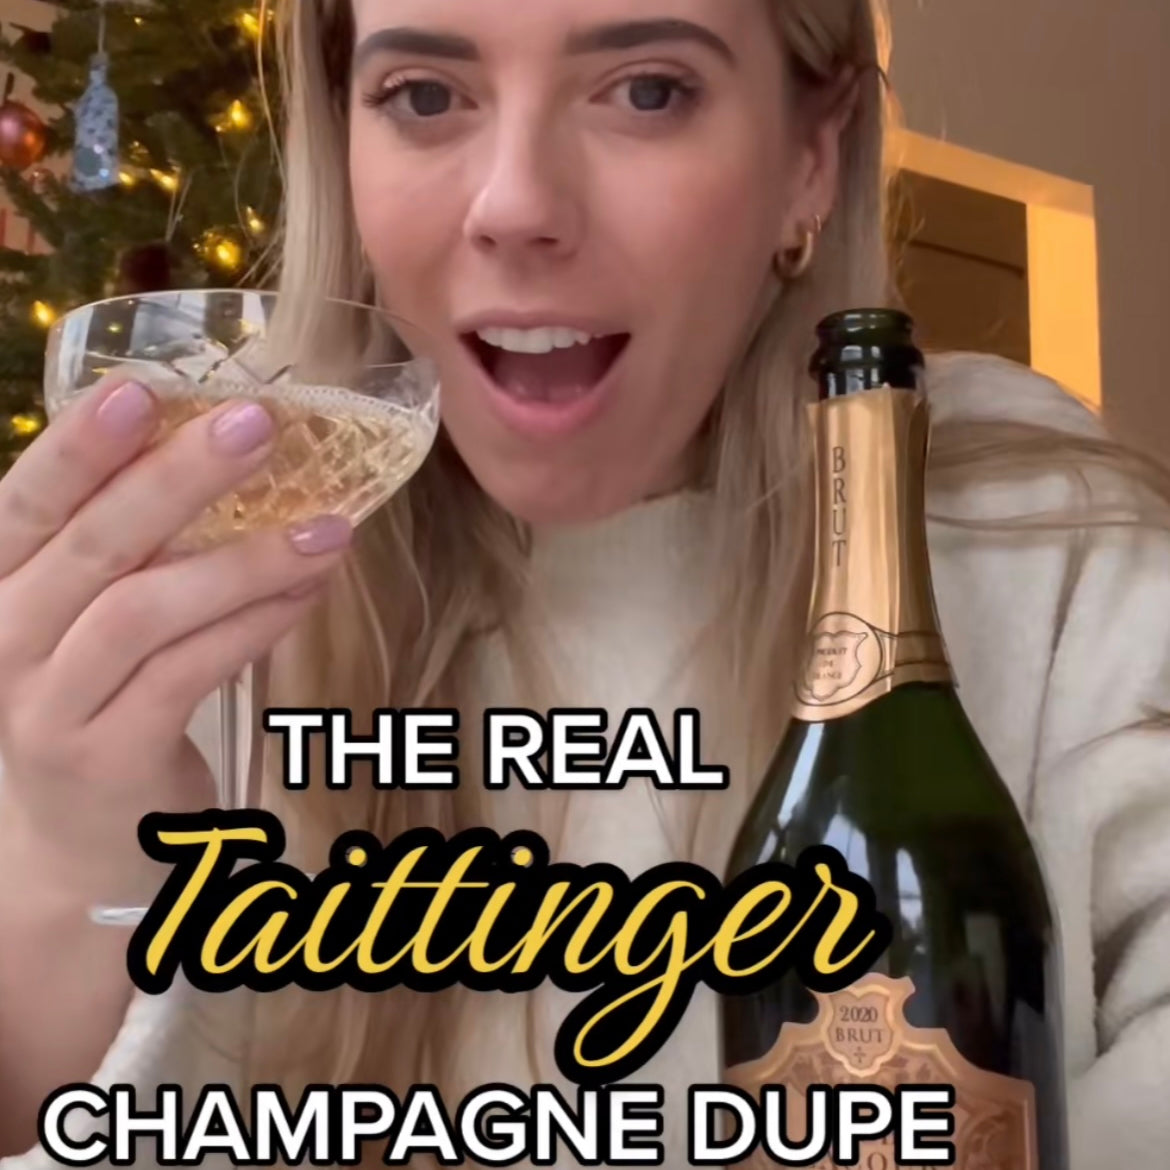 Taittinger Champagne dupe